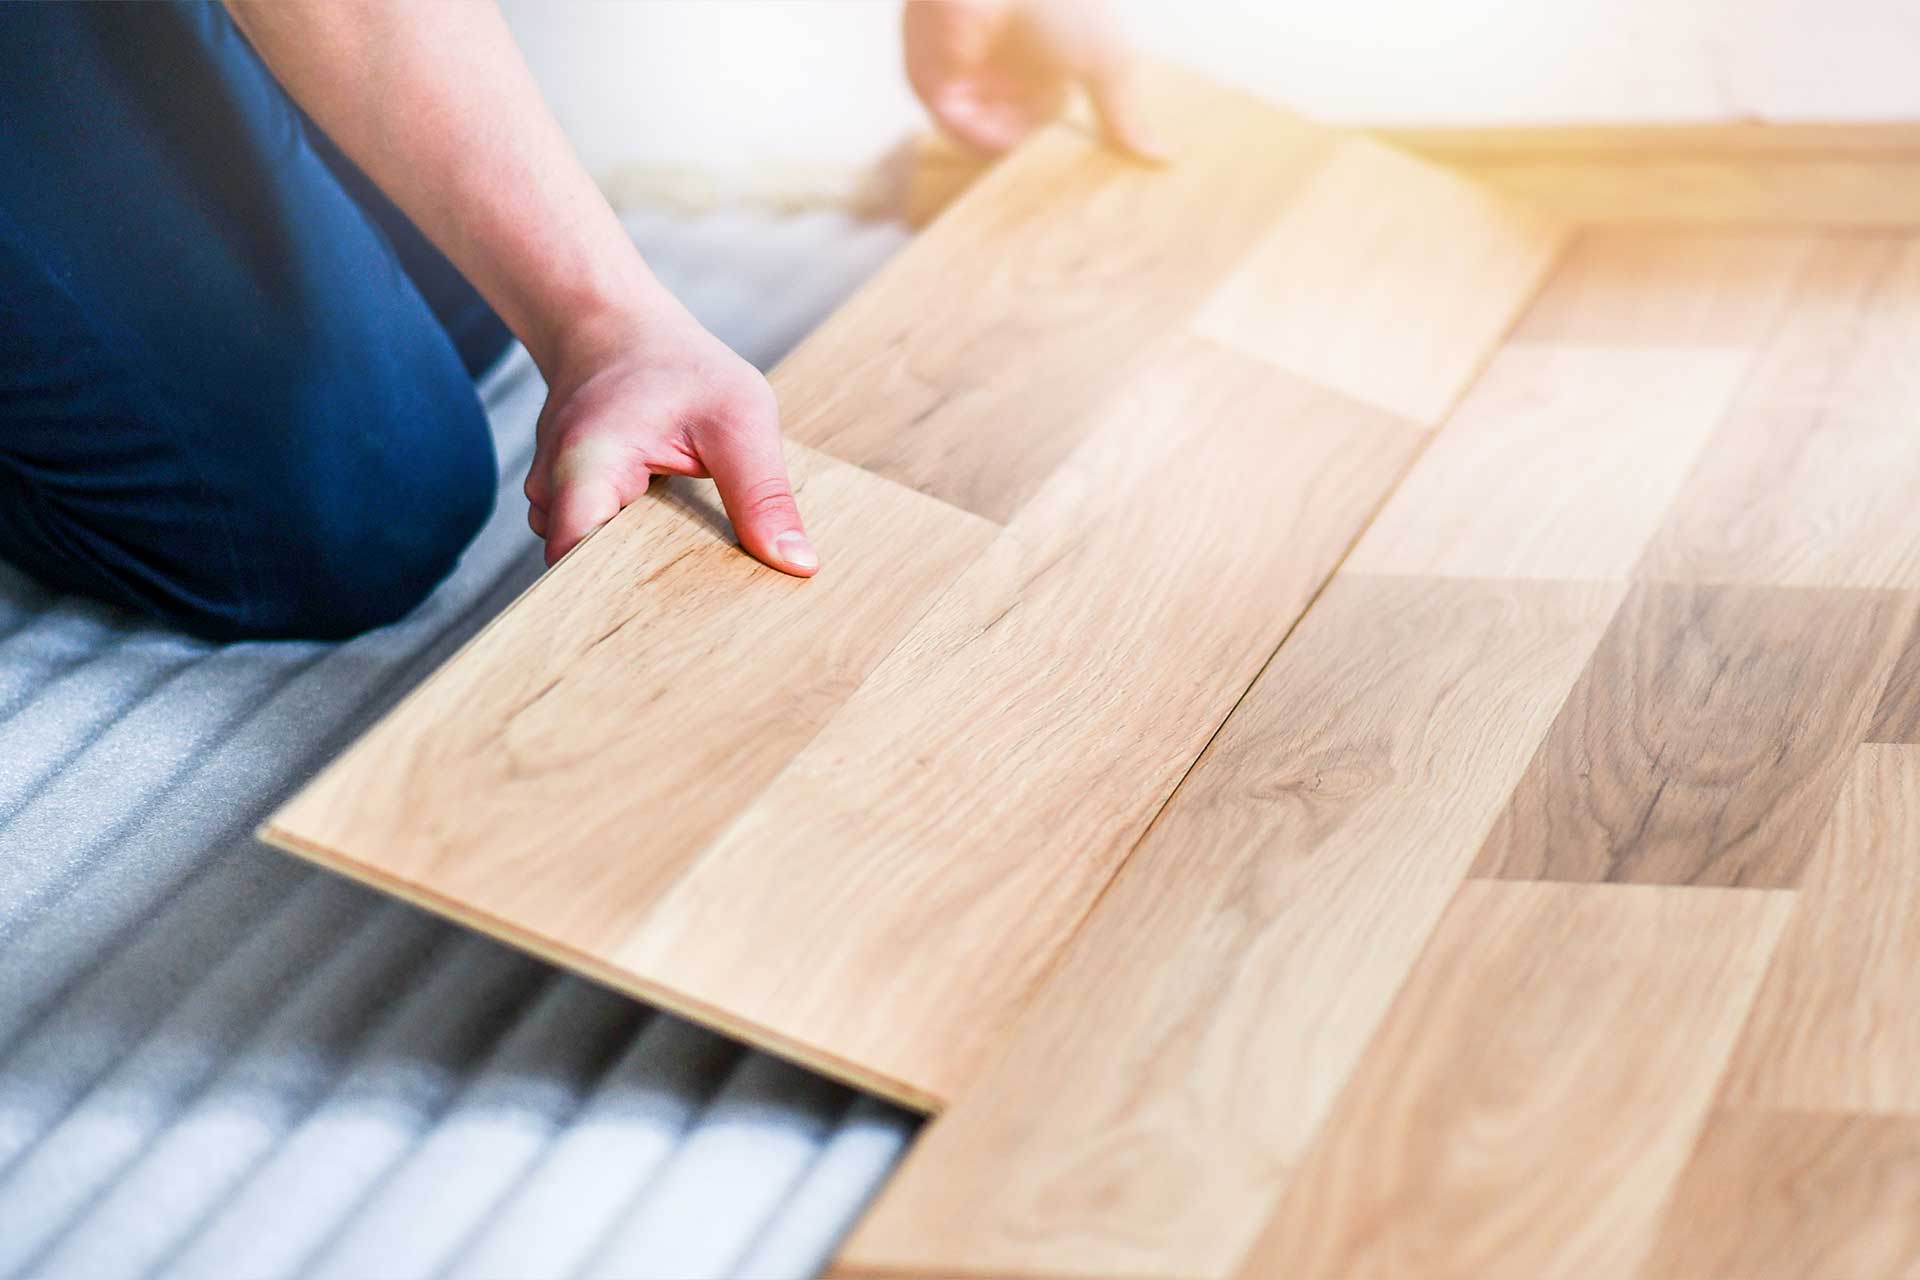 Laminate Flooring Fitting Cost In 2021, Wood Tiles Flooring Cost Calculator